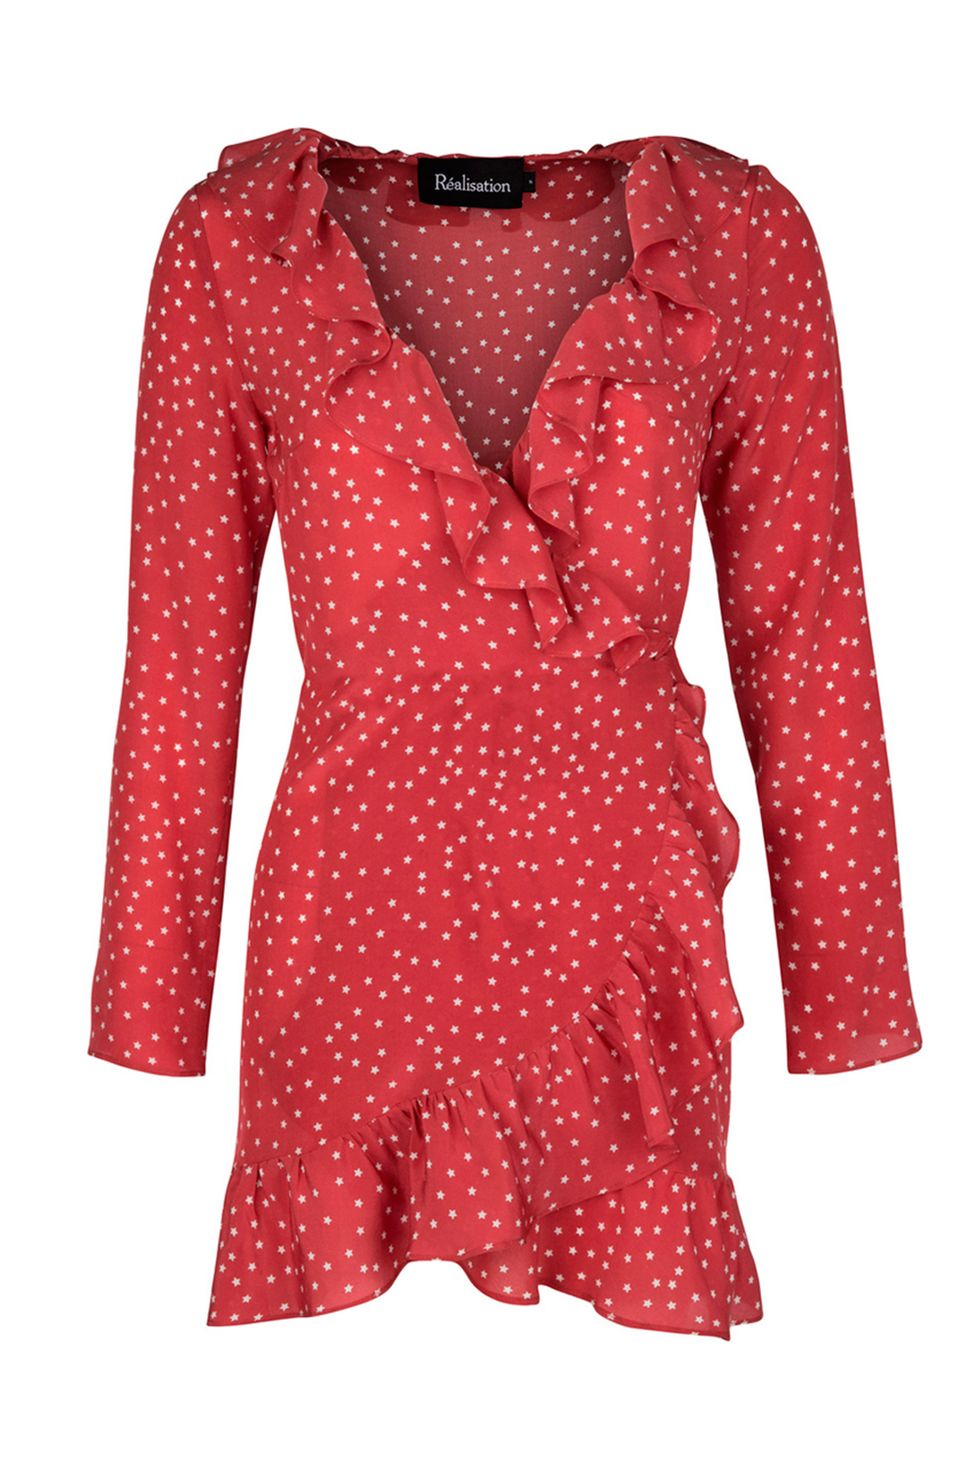 Clothing, Pattern, Sleeve, Pink, Red, Polka dot, Outerwear, Design, Magenta, Dress, 